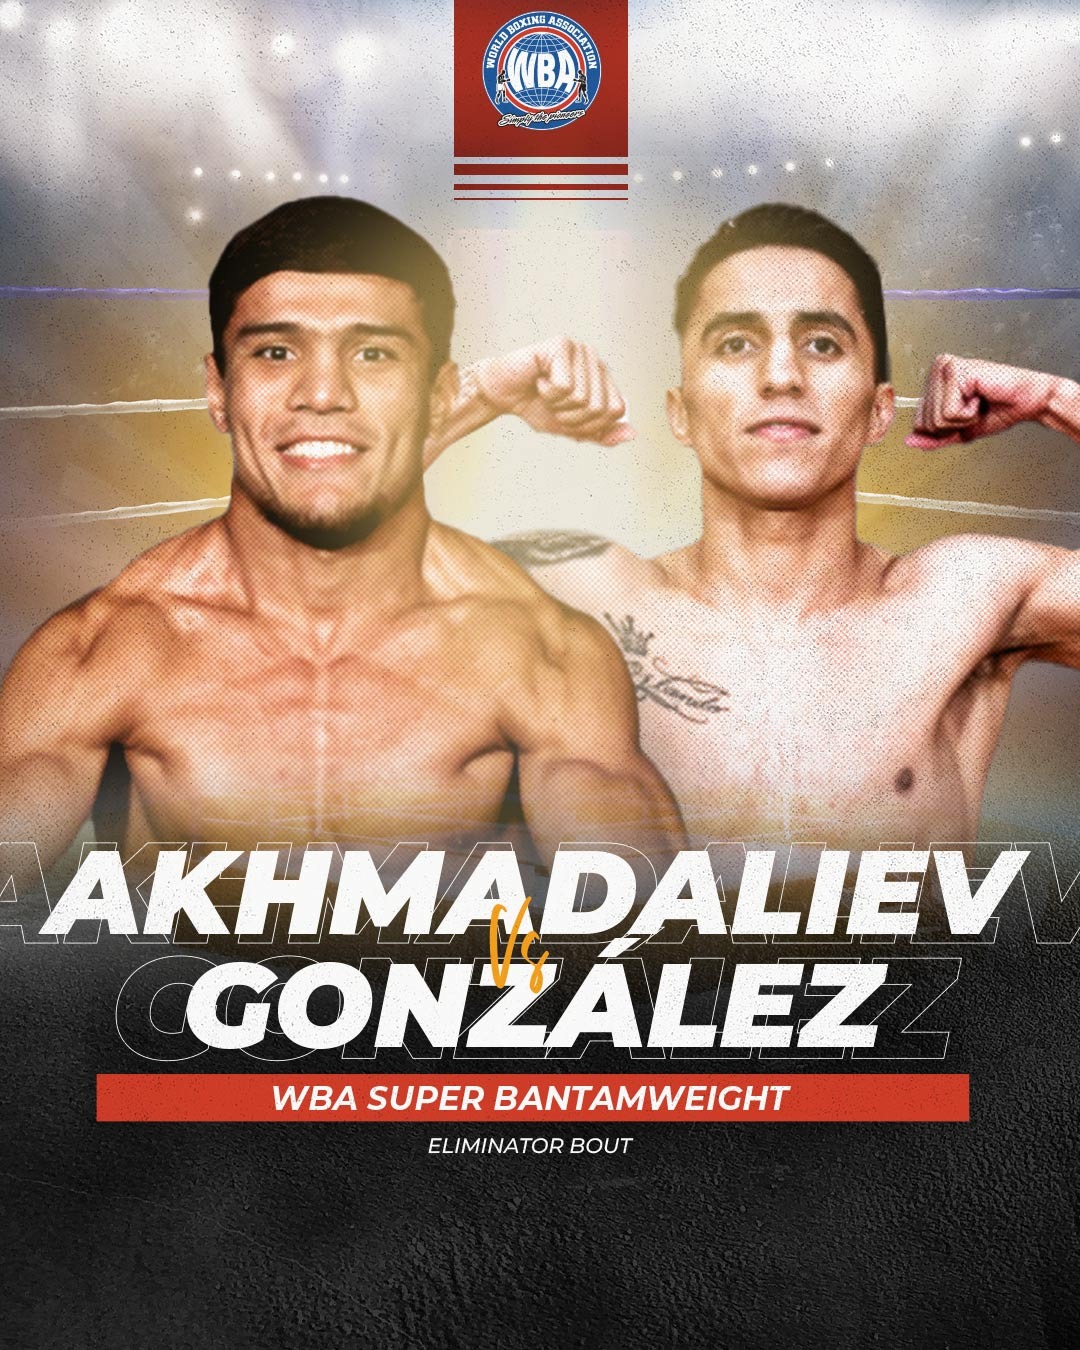 Akhmadaliev-Gonzalez will be on December 16 